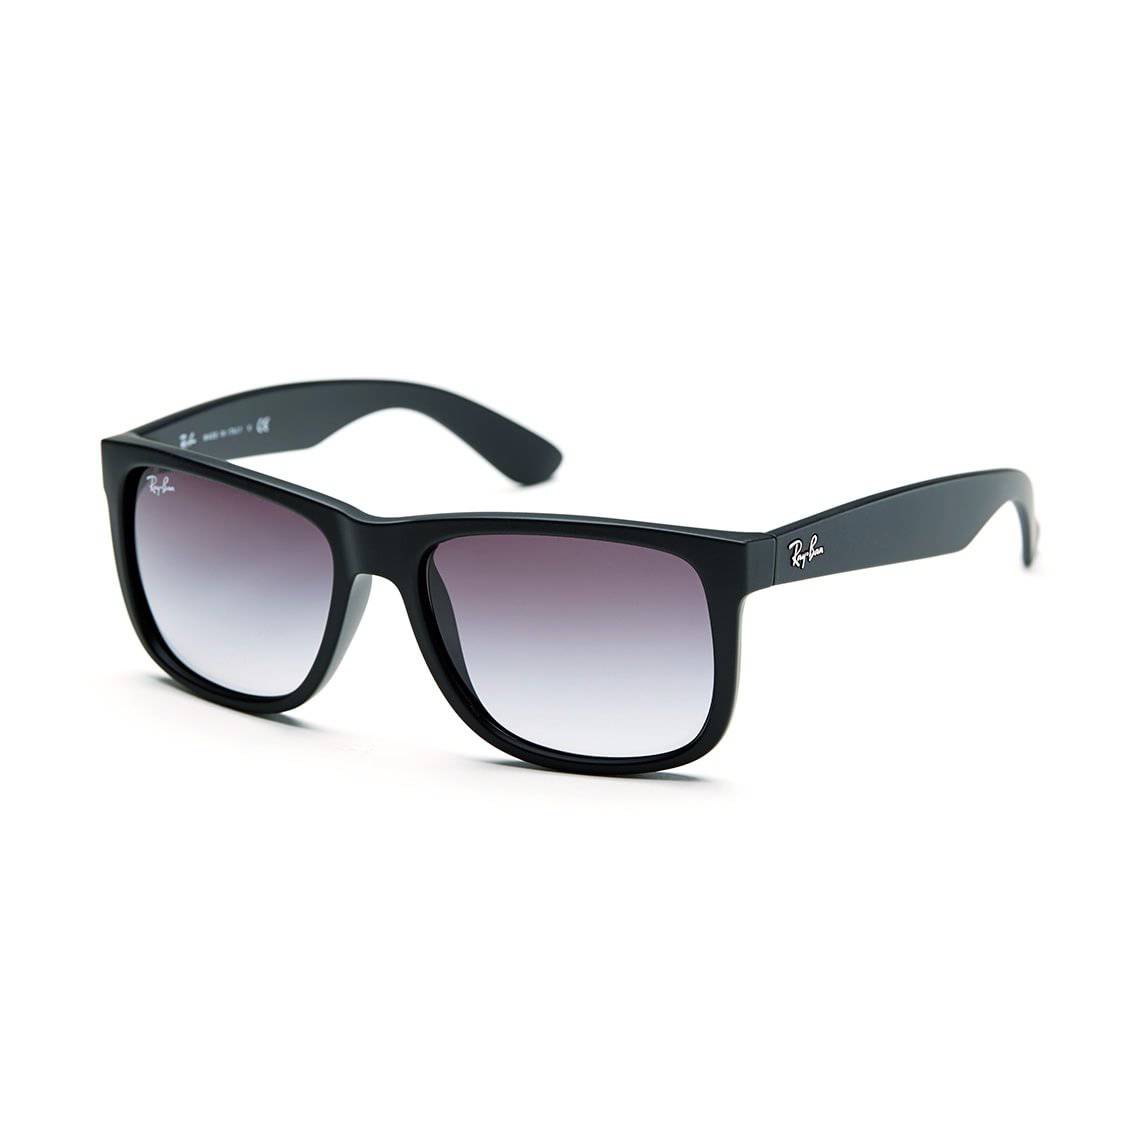 Ray Ban Justin Classic Grey Gradient Rectangular Men Sunglasses RB4165 601/8G 54